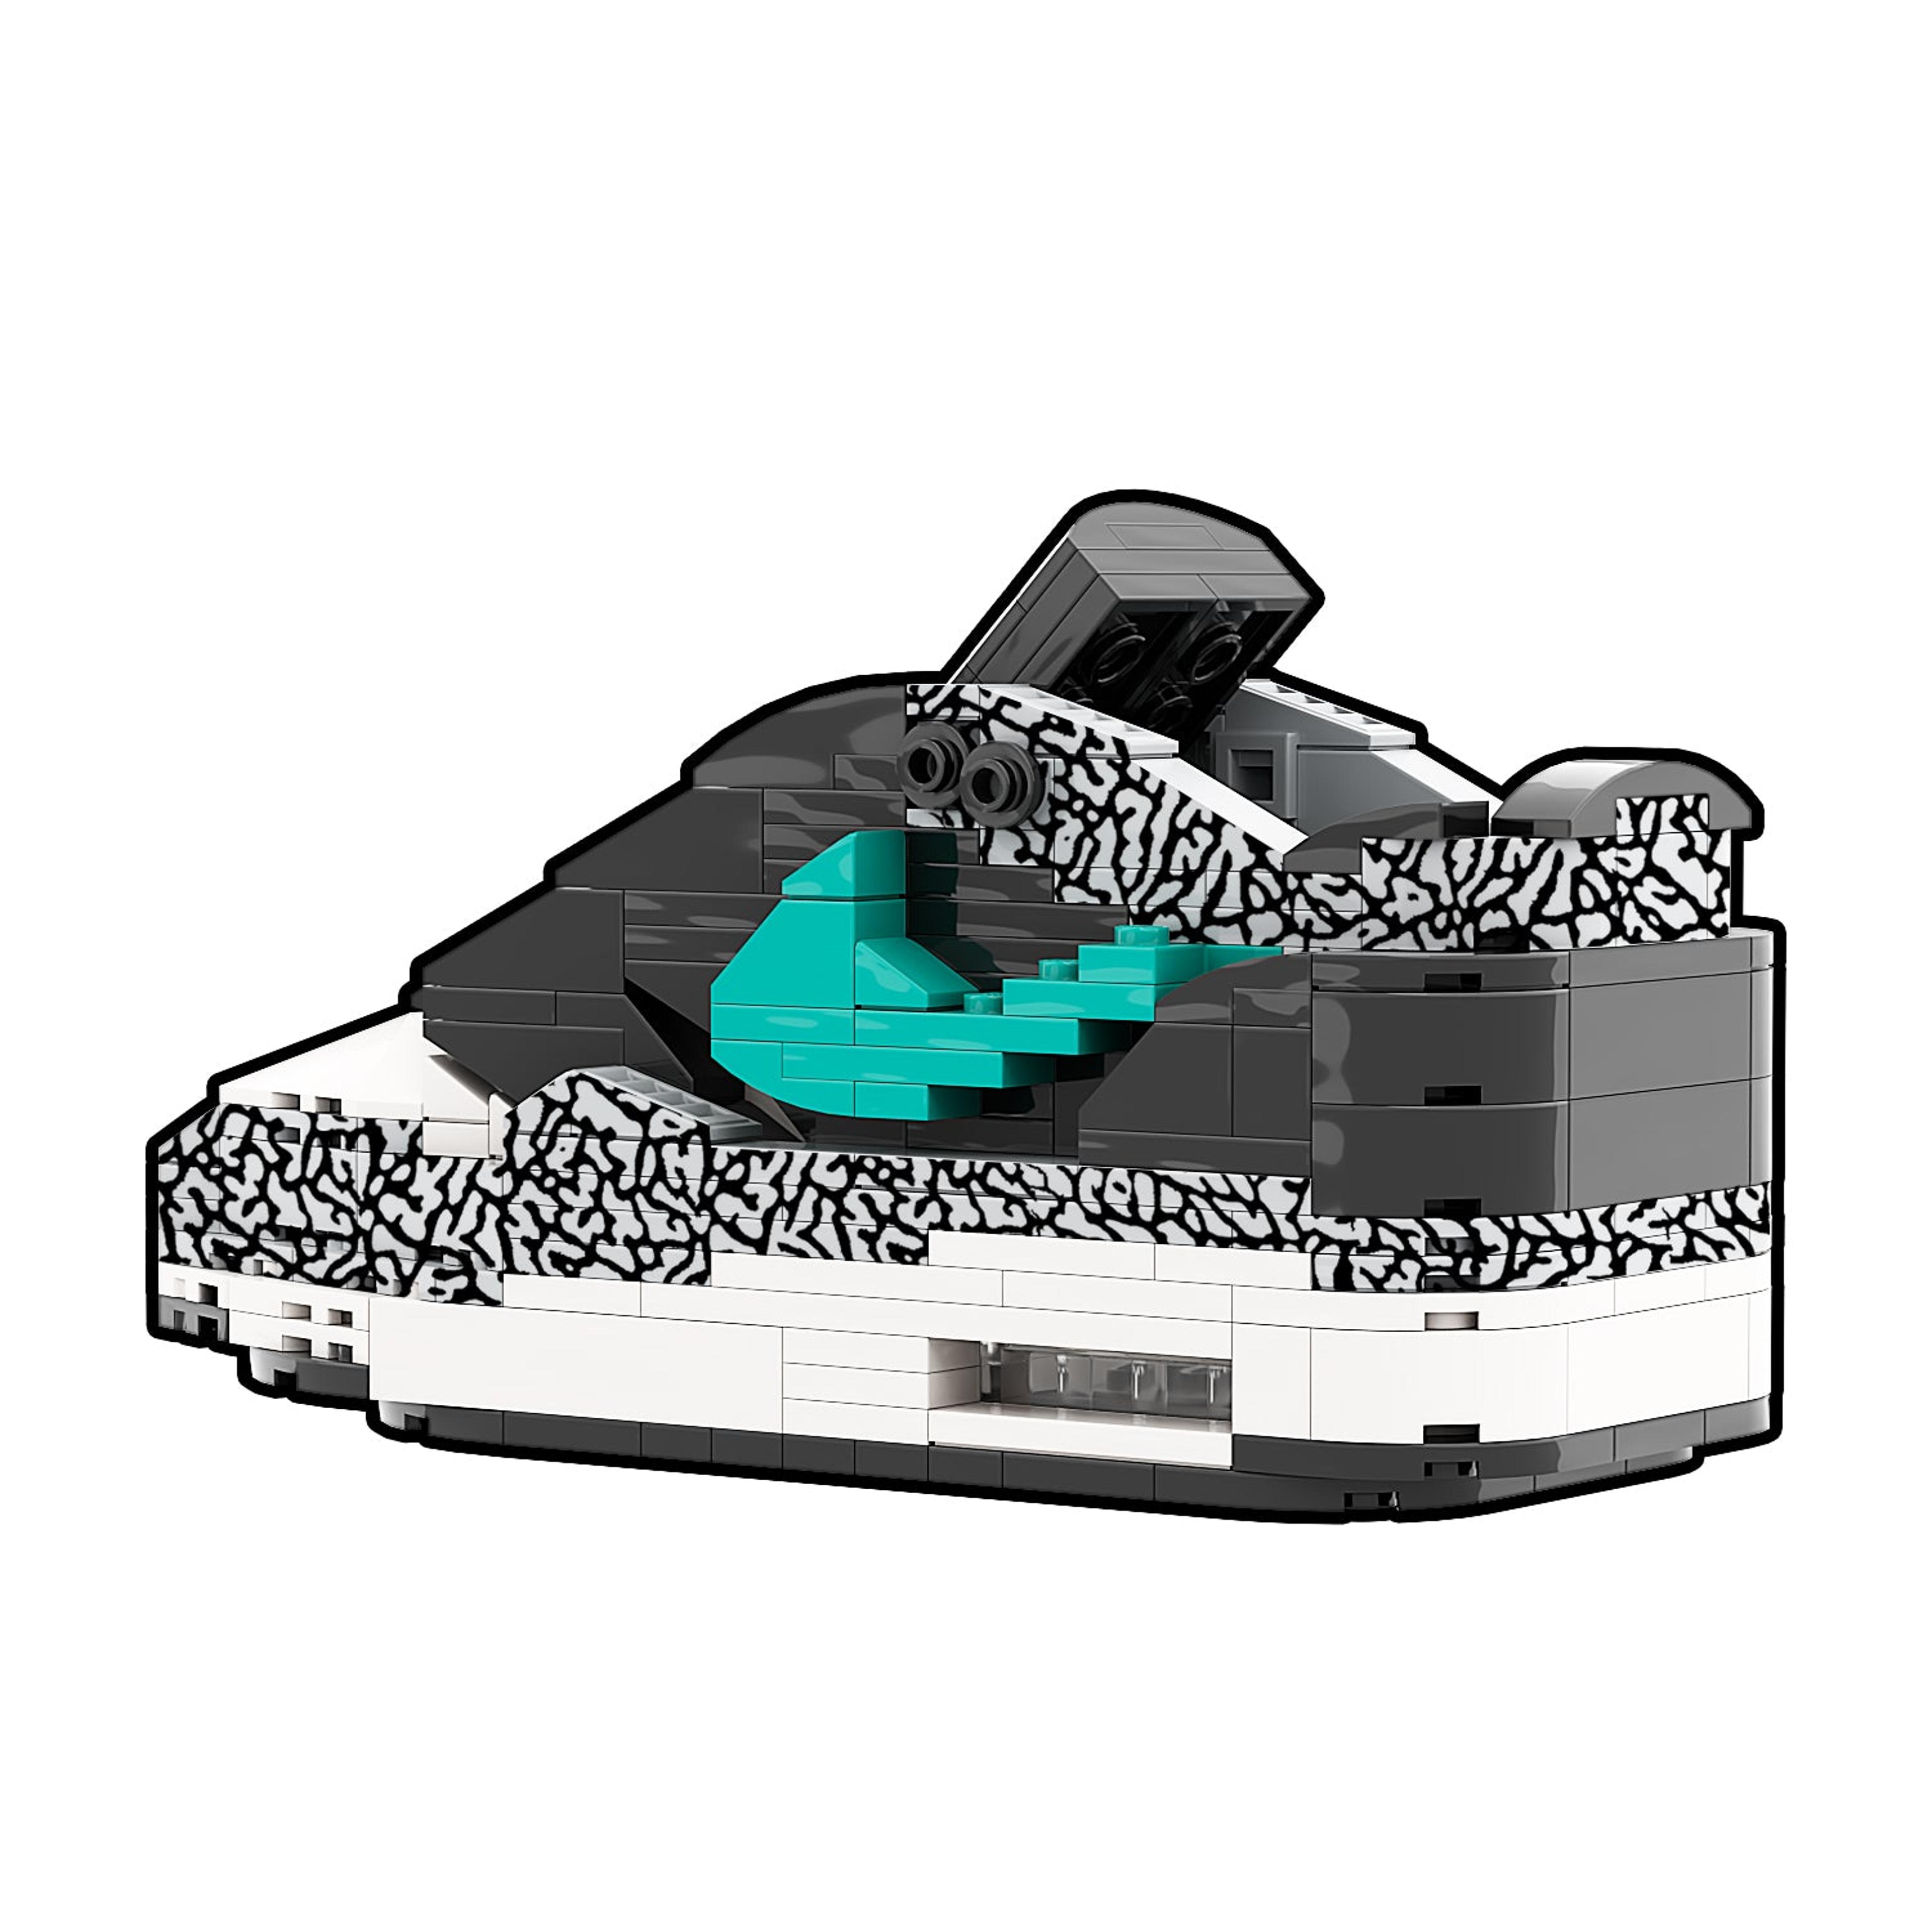 Alternate View 3 of REGULAR Air Max 1 "Atmos" Sneaker Bricks with Mini Figure